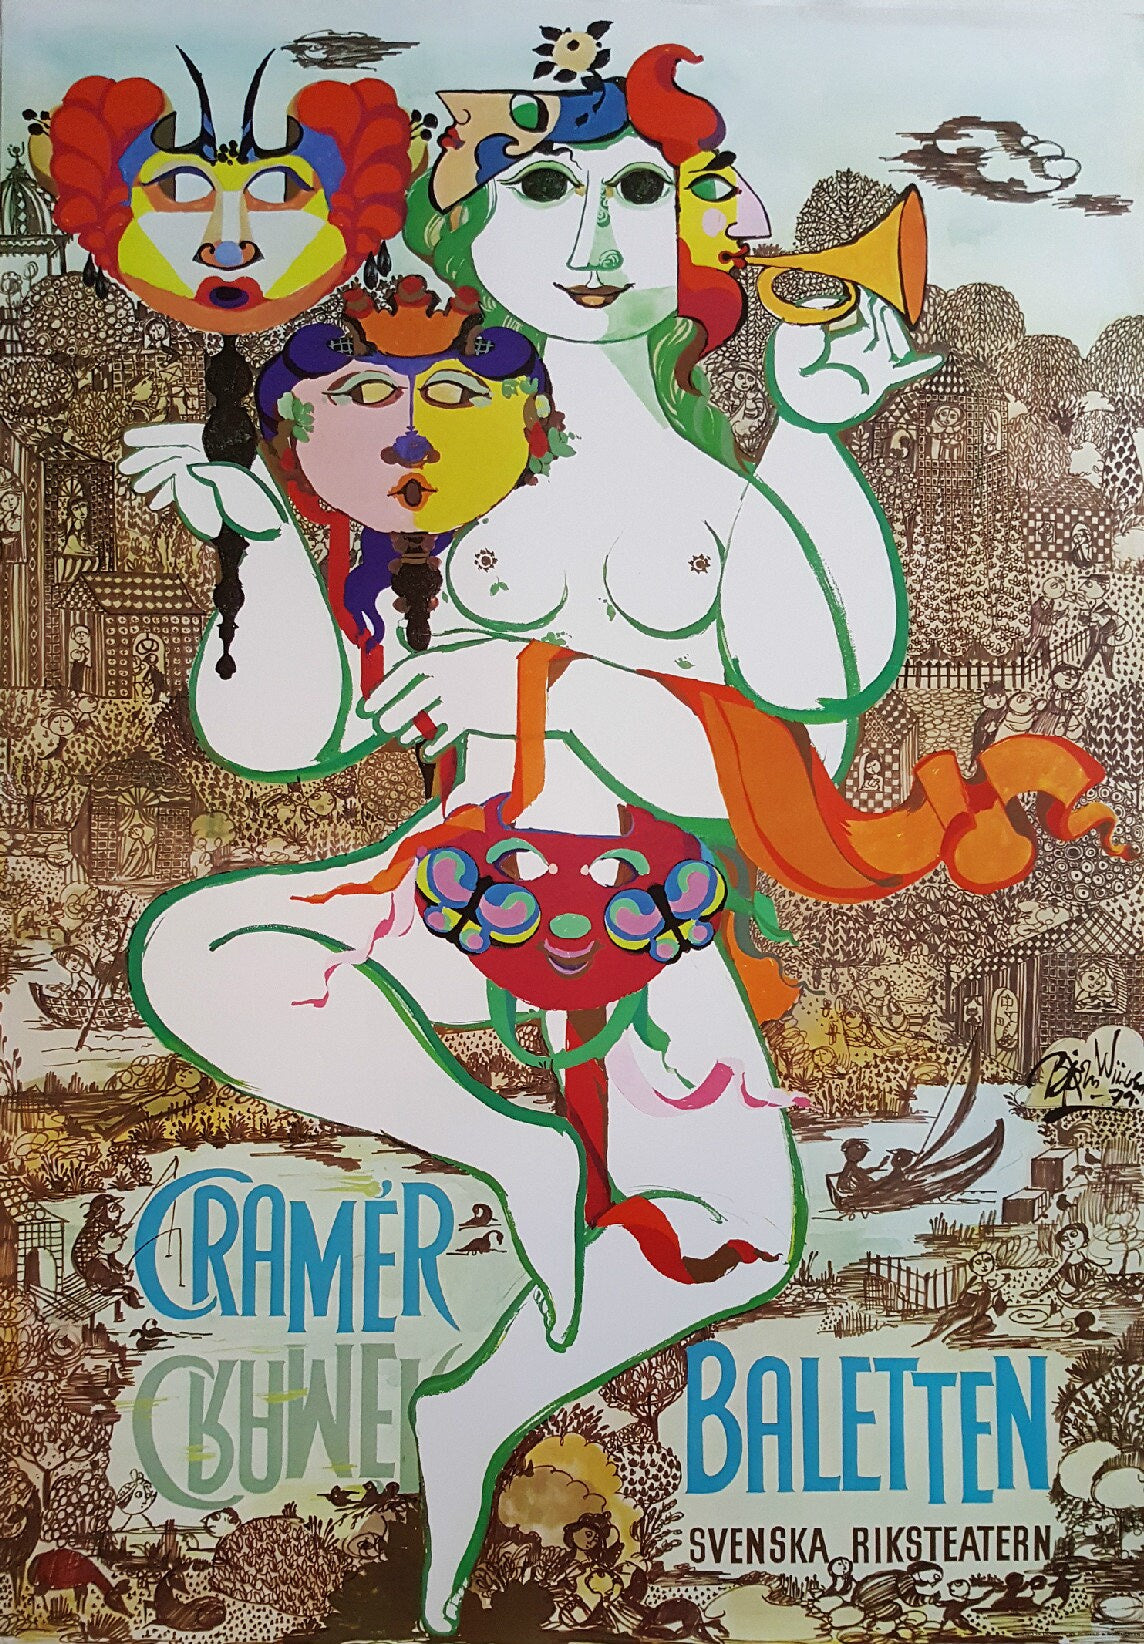 1979 Wiinblad Cramér Baletten - Original Vintage Poster